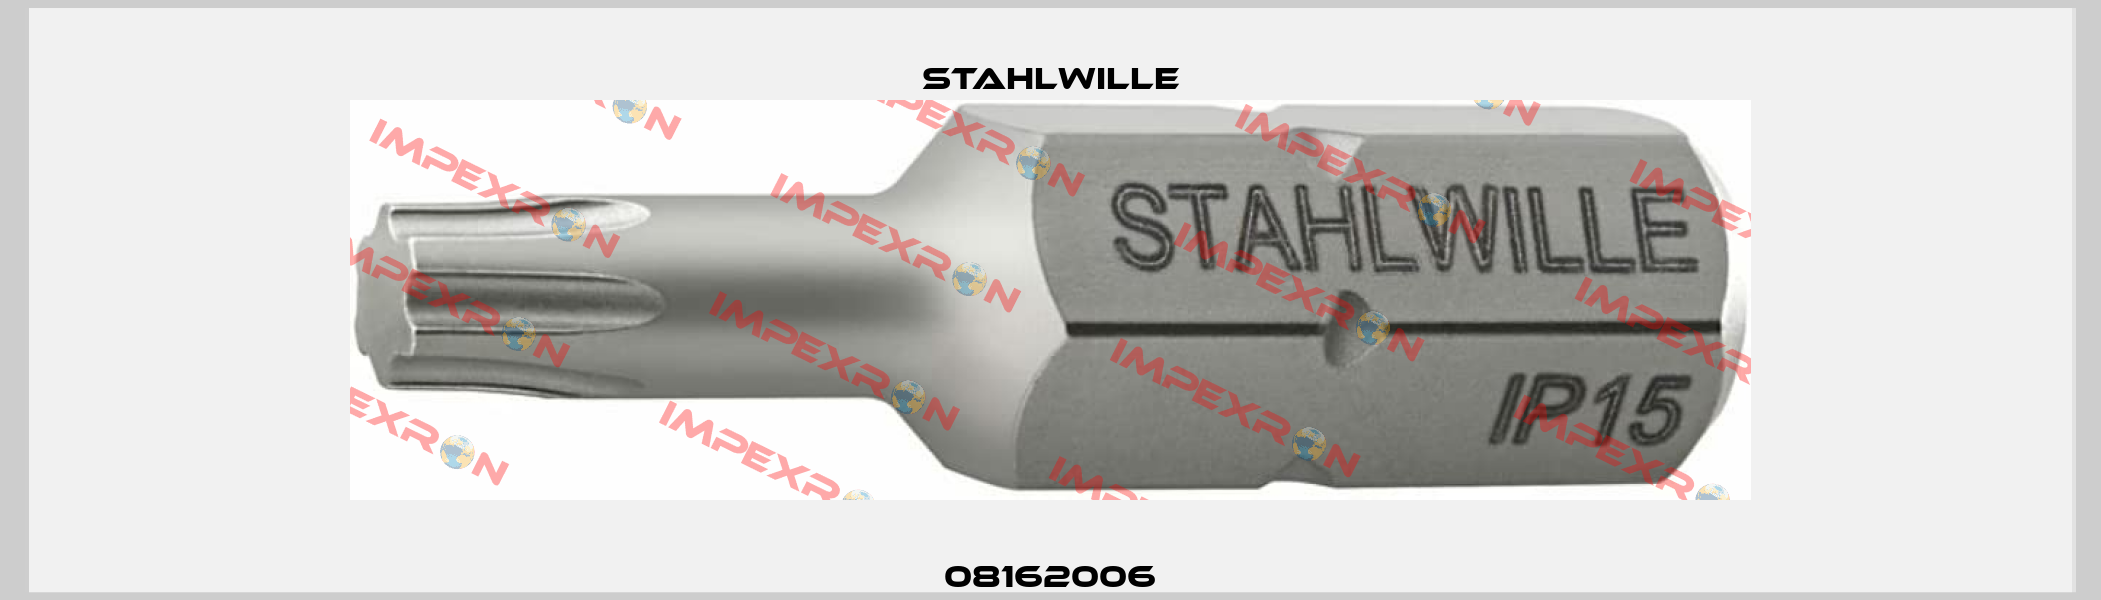 08162006 Stahlwille